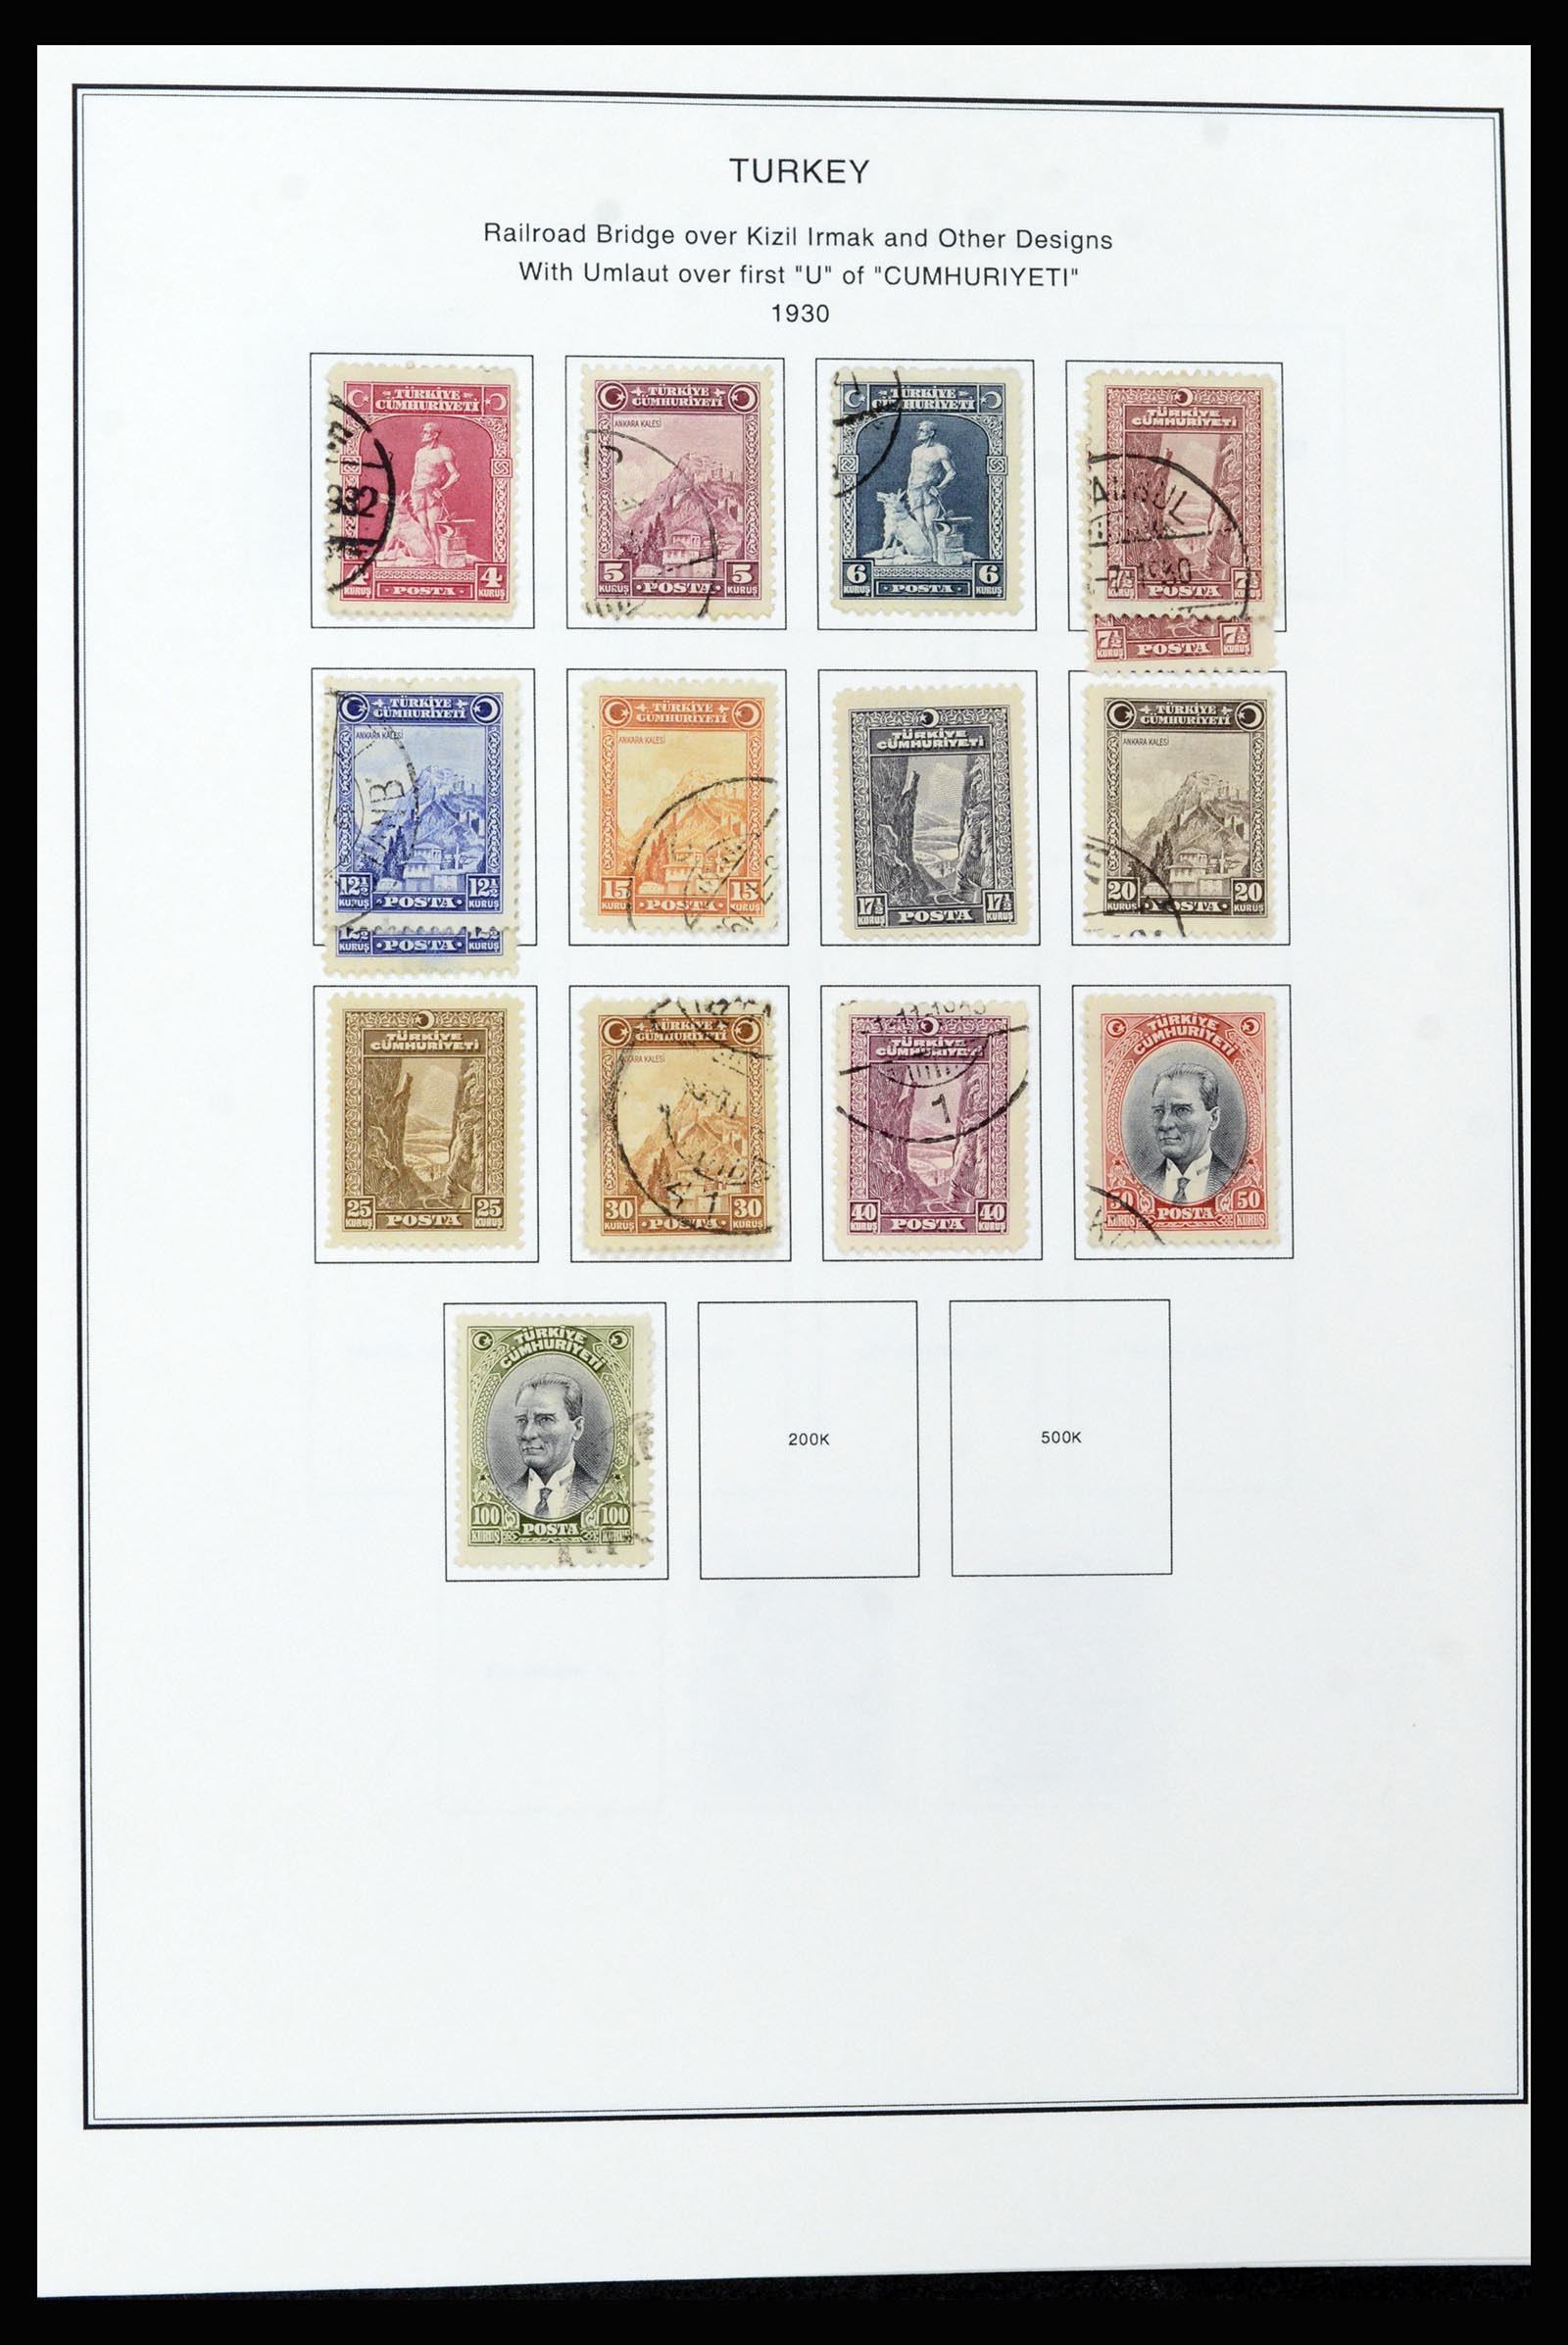 37224 043 - Stamp collection 37224 Turkey 1863-2000.